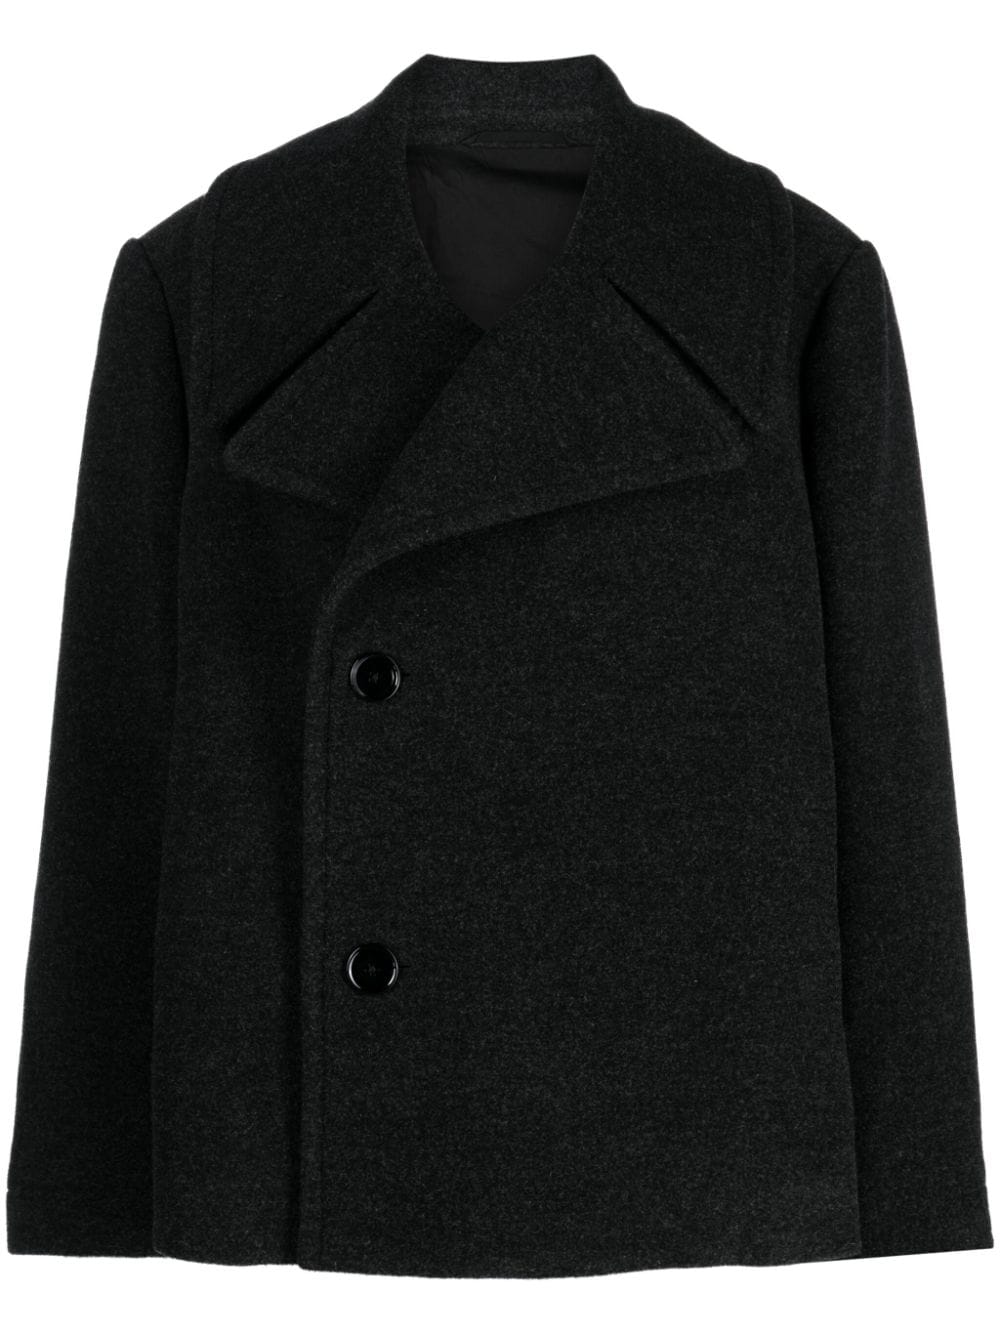 mélange wool jacket